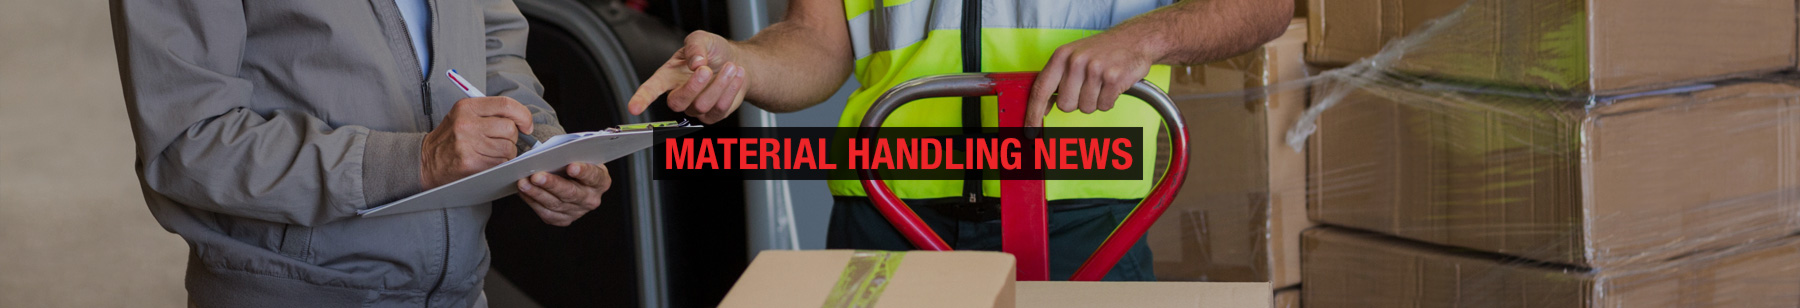 Blog for Material Handling Equipment in York County PA - Harford - Baltimore - Howard County MD - Mid-Atlantic Region